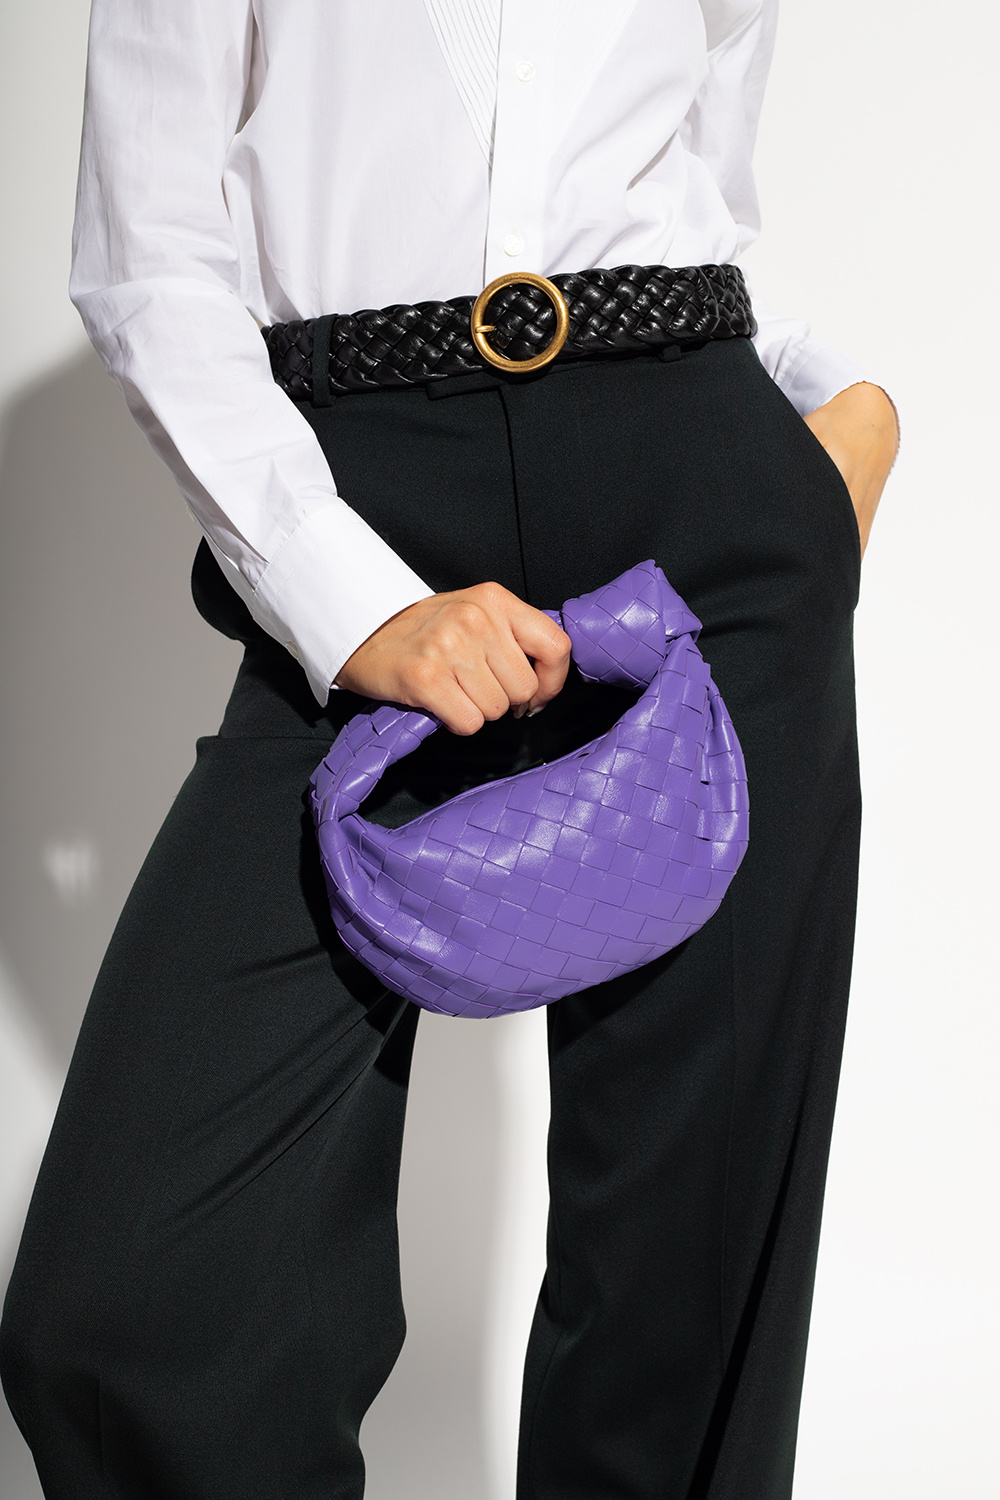 Bottega Veneta Purple Mini Jodie Bag